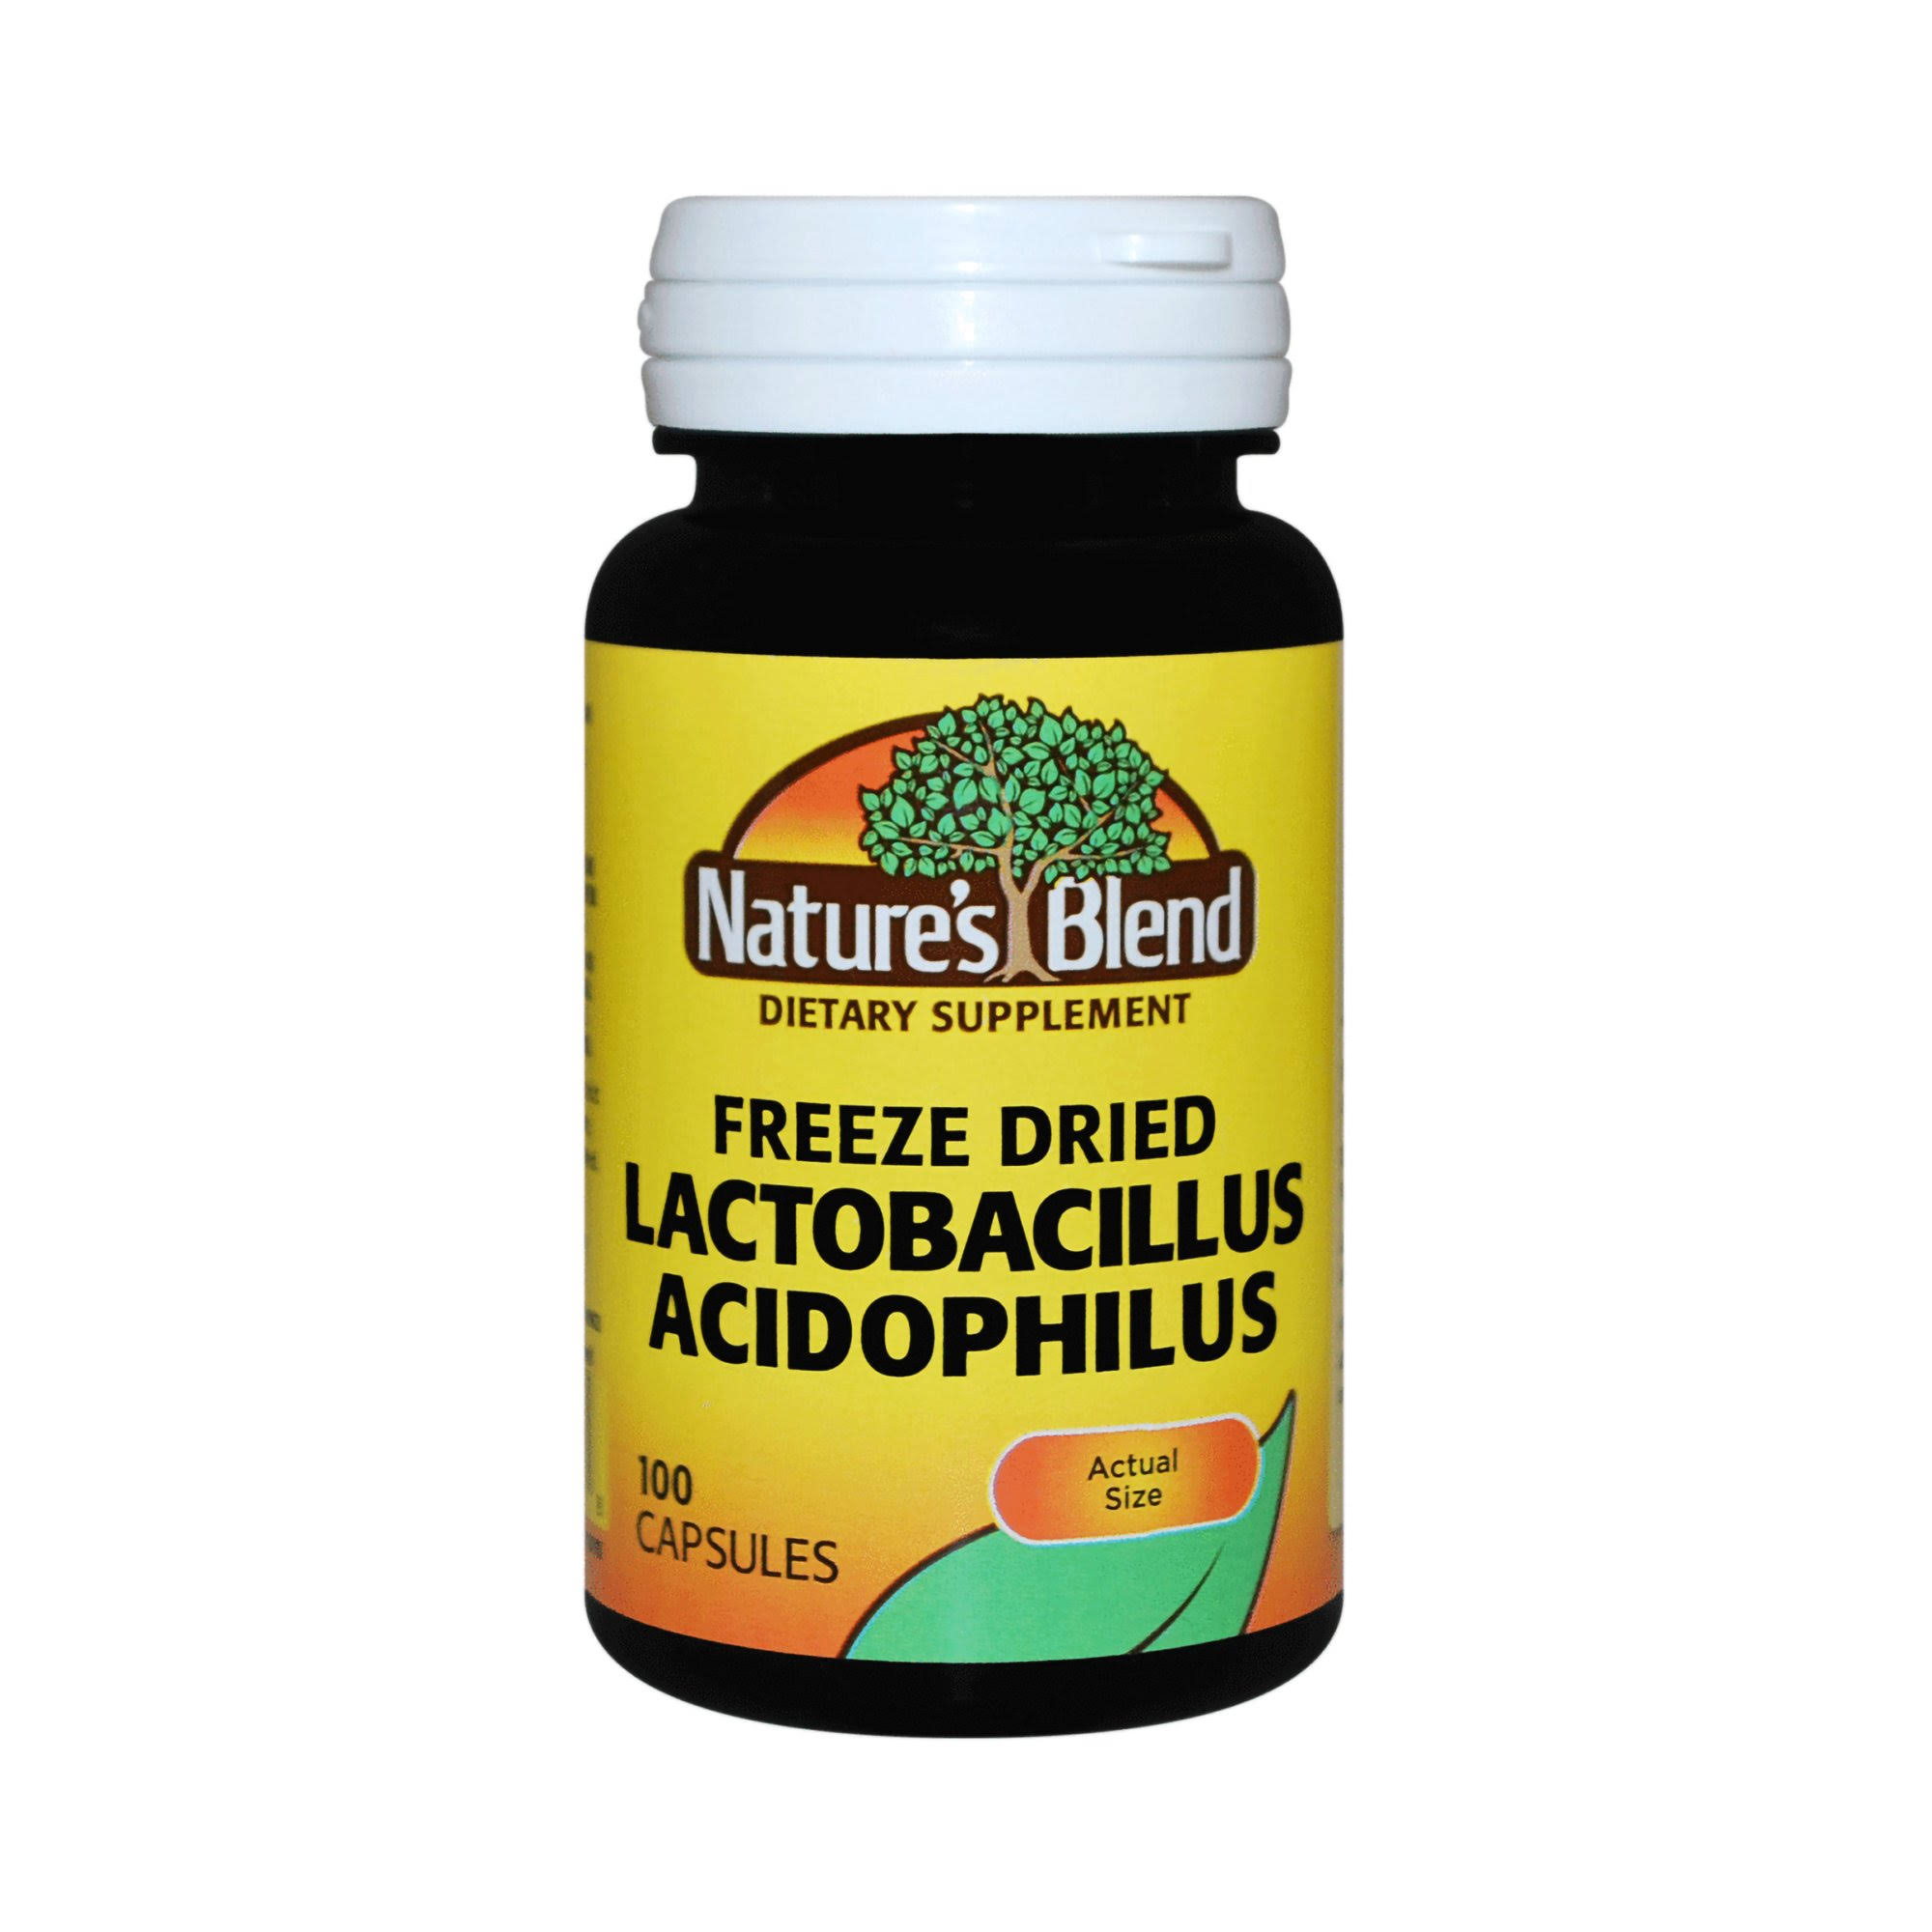 Nature's Blend Freeze Dried Lactobacillin Acidophilus Dietary Supplement - 100 Capsules